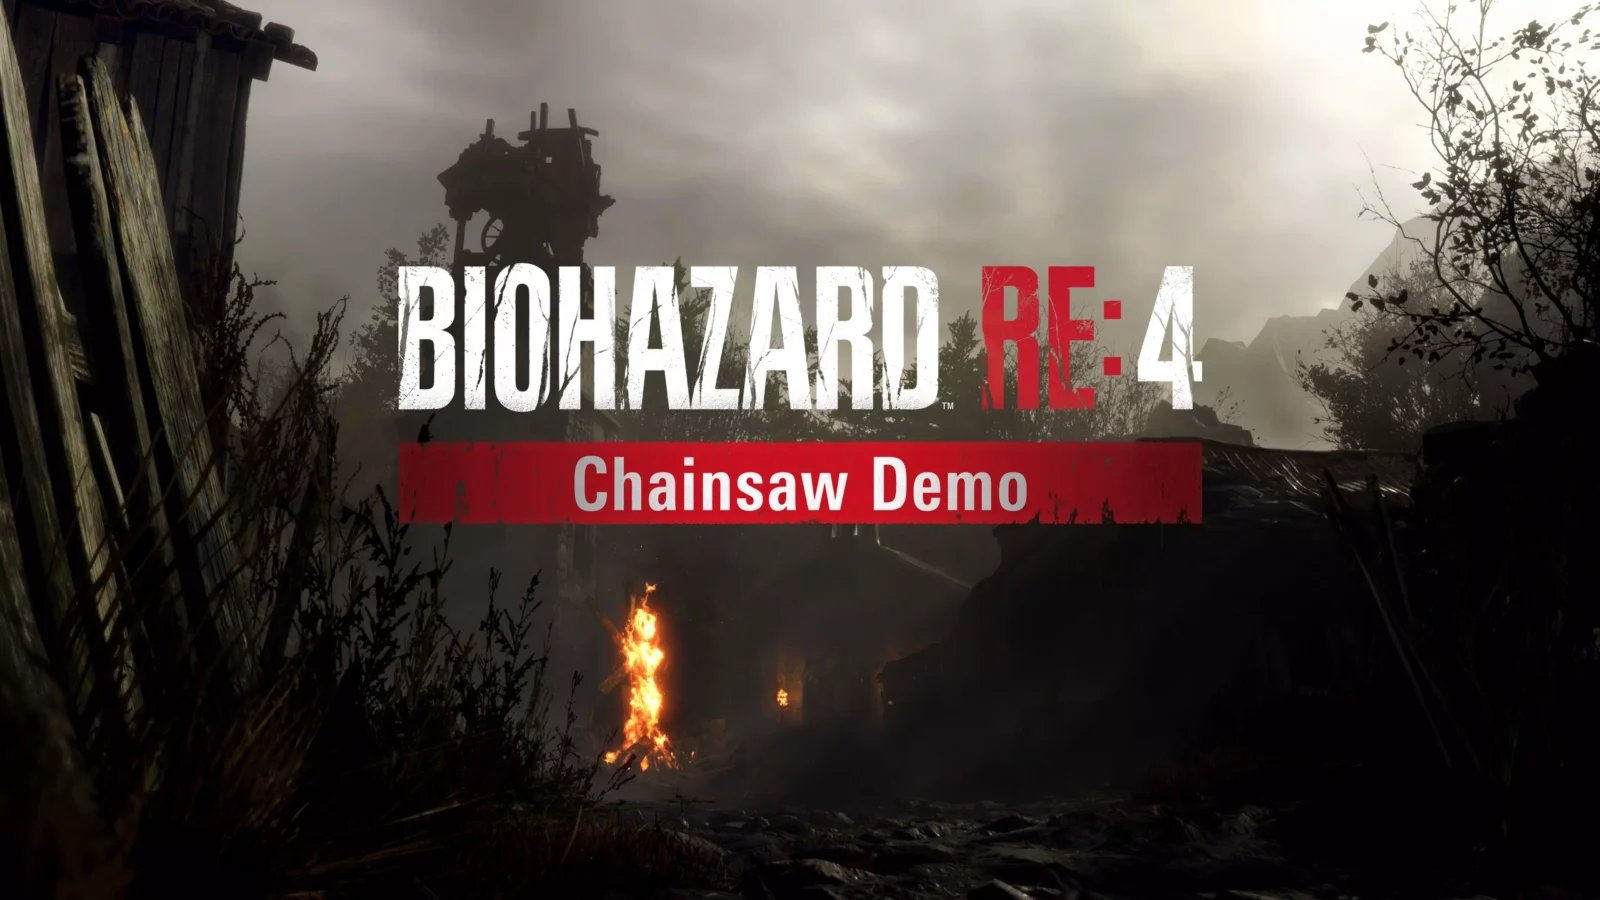 Resident Evil 4 Remake Chainsaw Demo